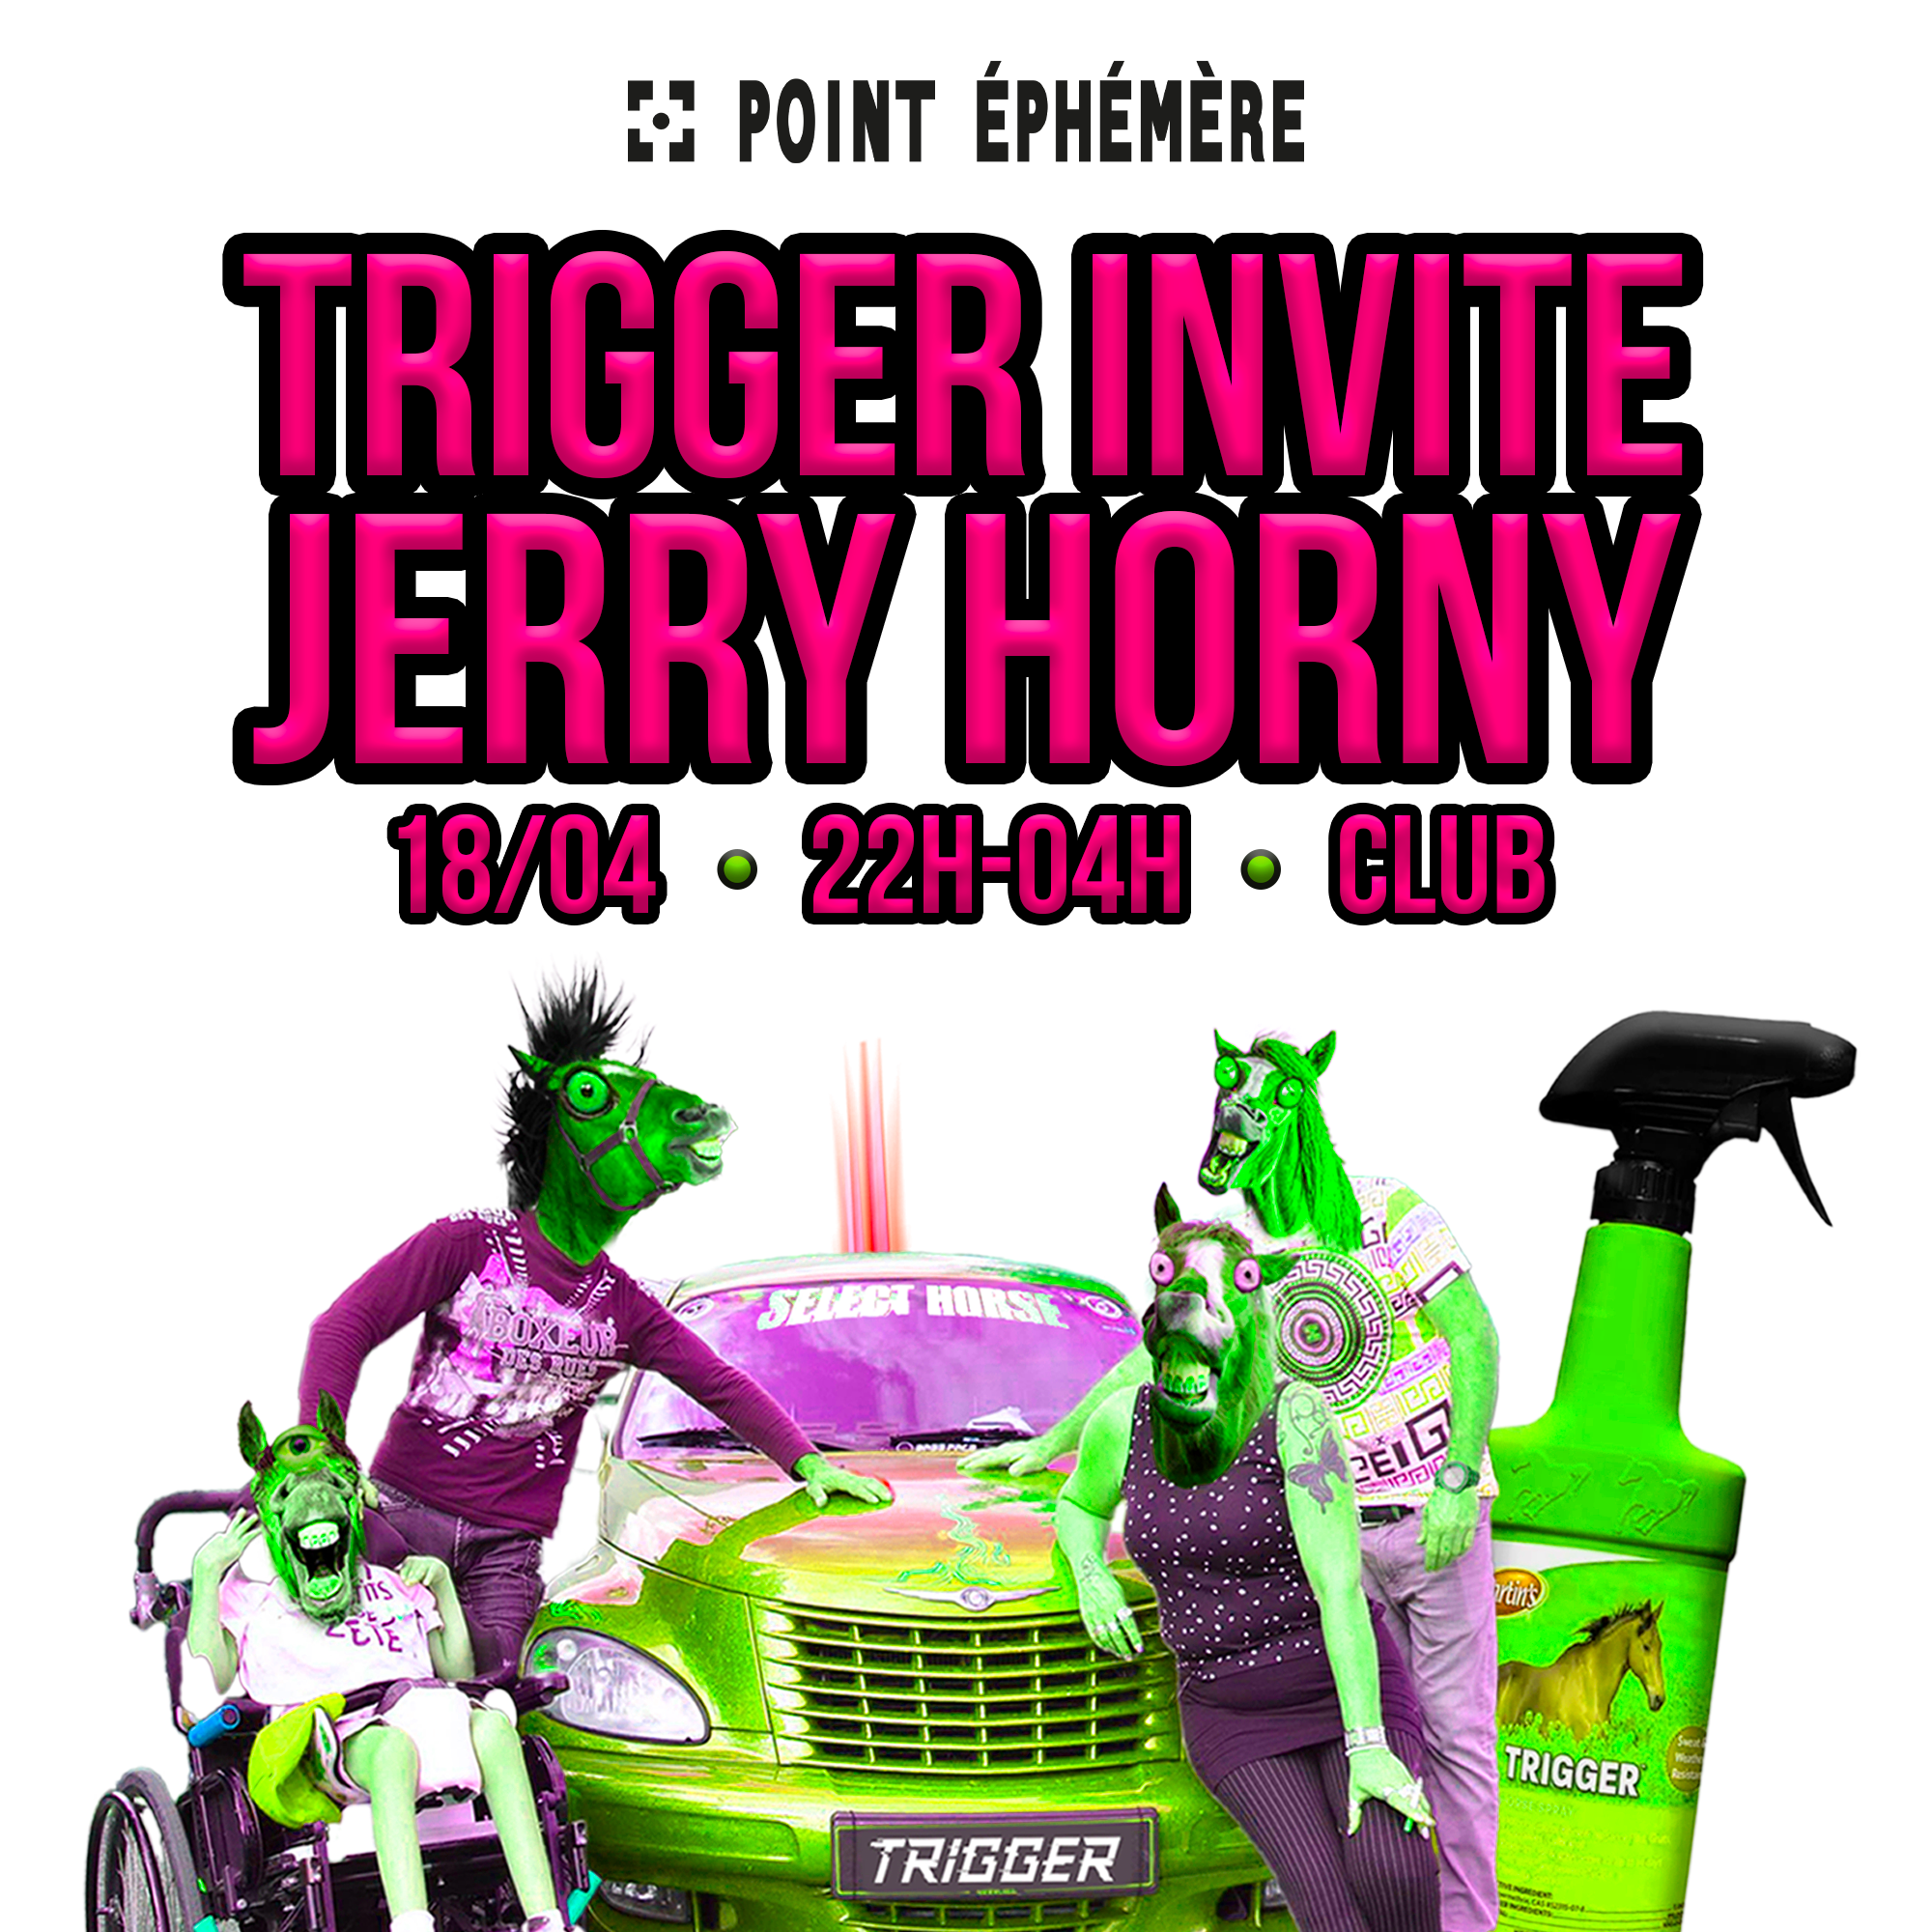 Trigger invite Jerry Horny - フライヤー表